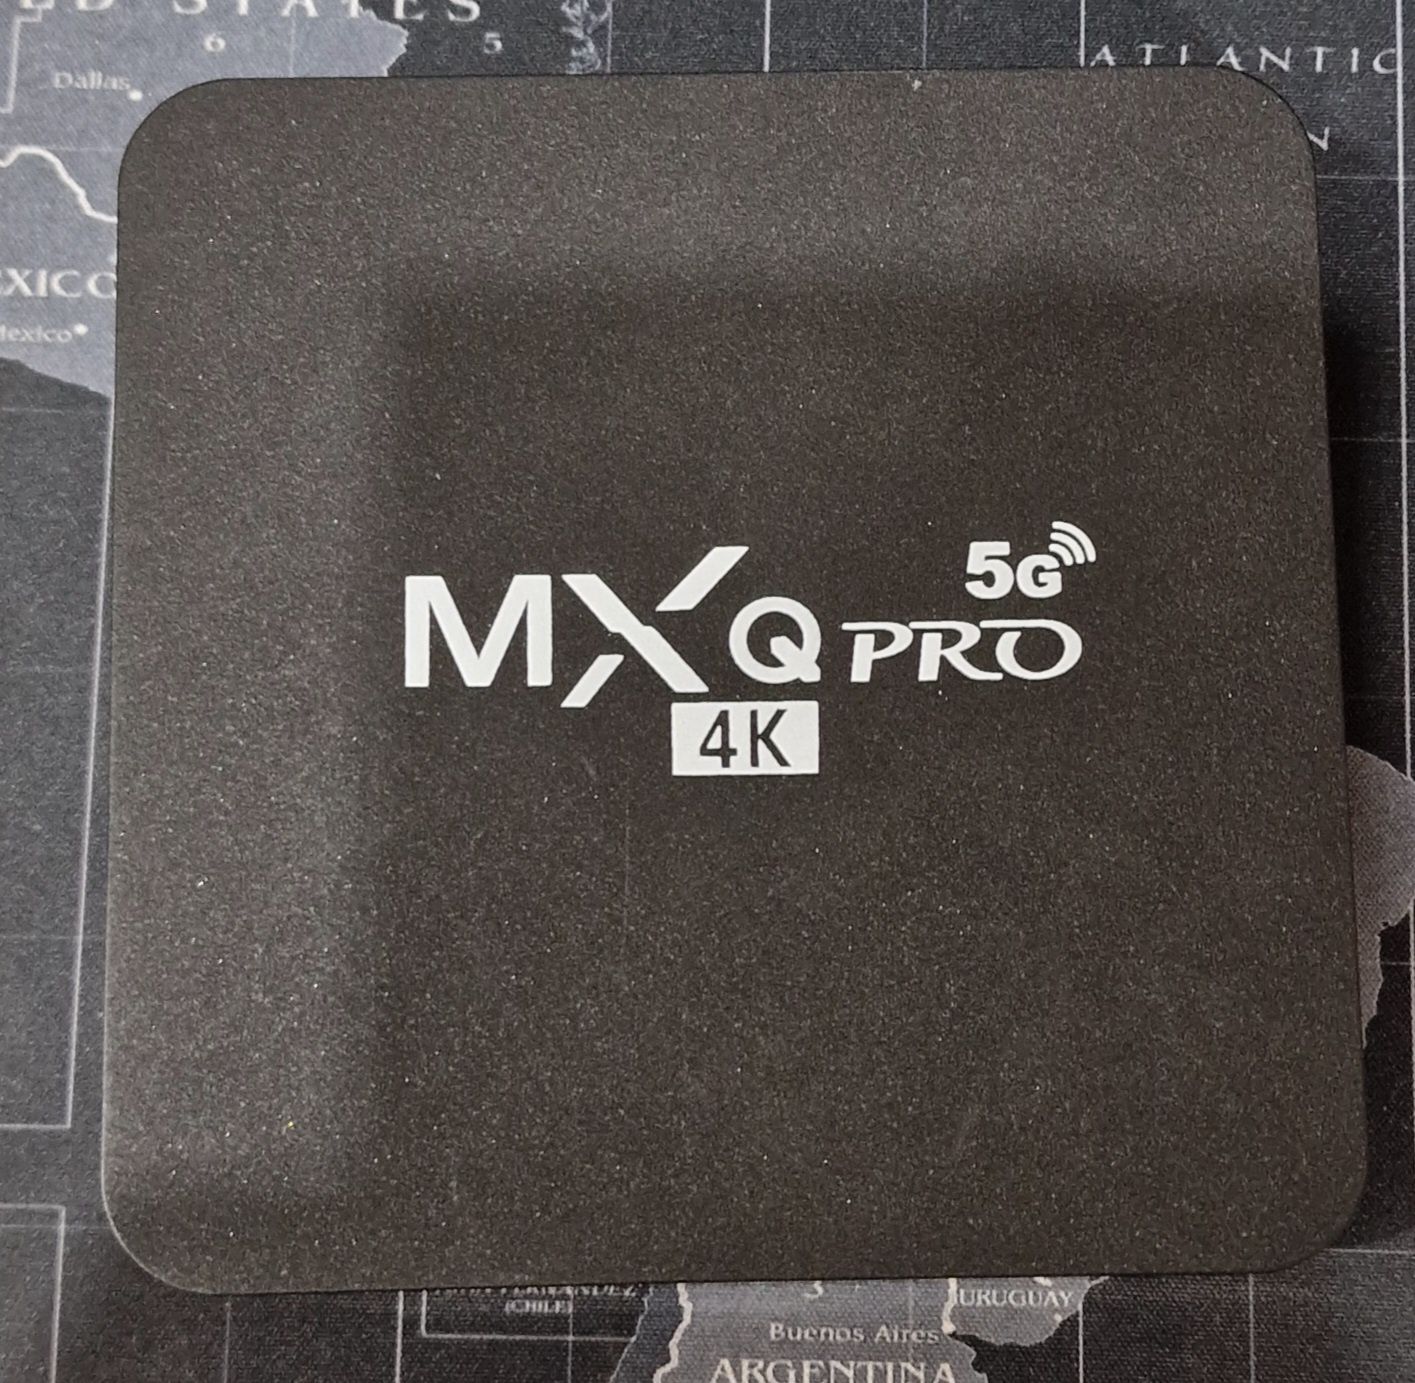 TVBOX MXq pro 5G 4K